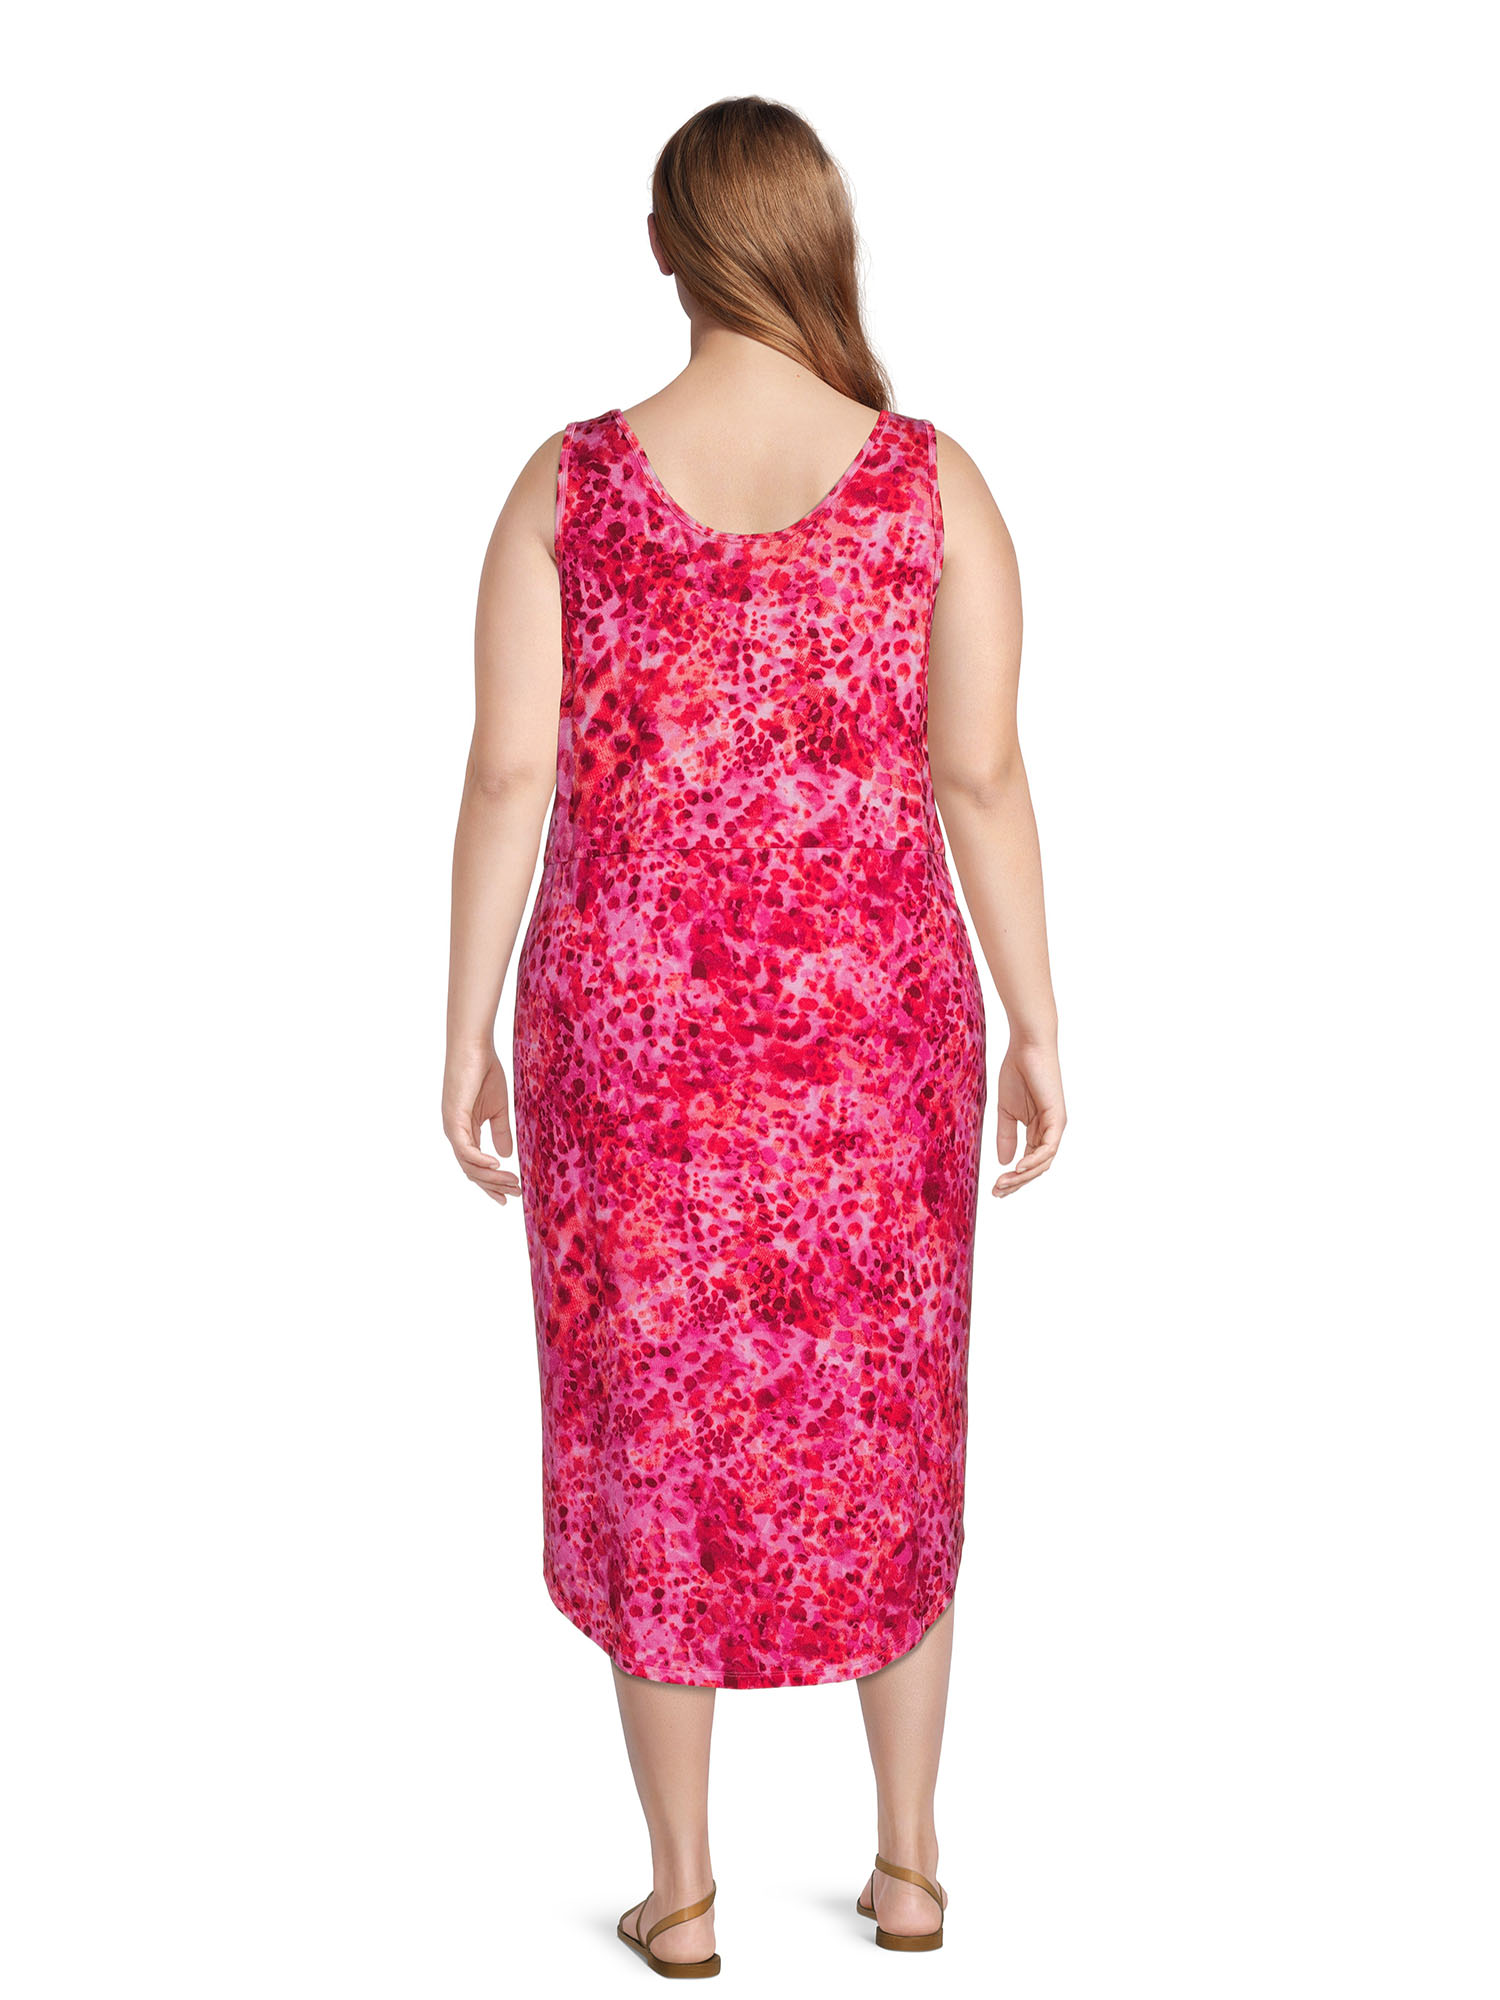 Terra & Sky Women's Plus Size Drawstring Waist Tank Dress - image 3 of 5